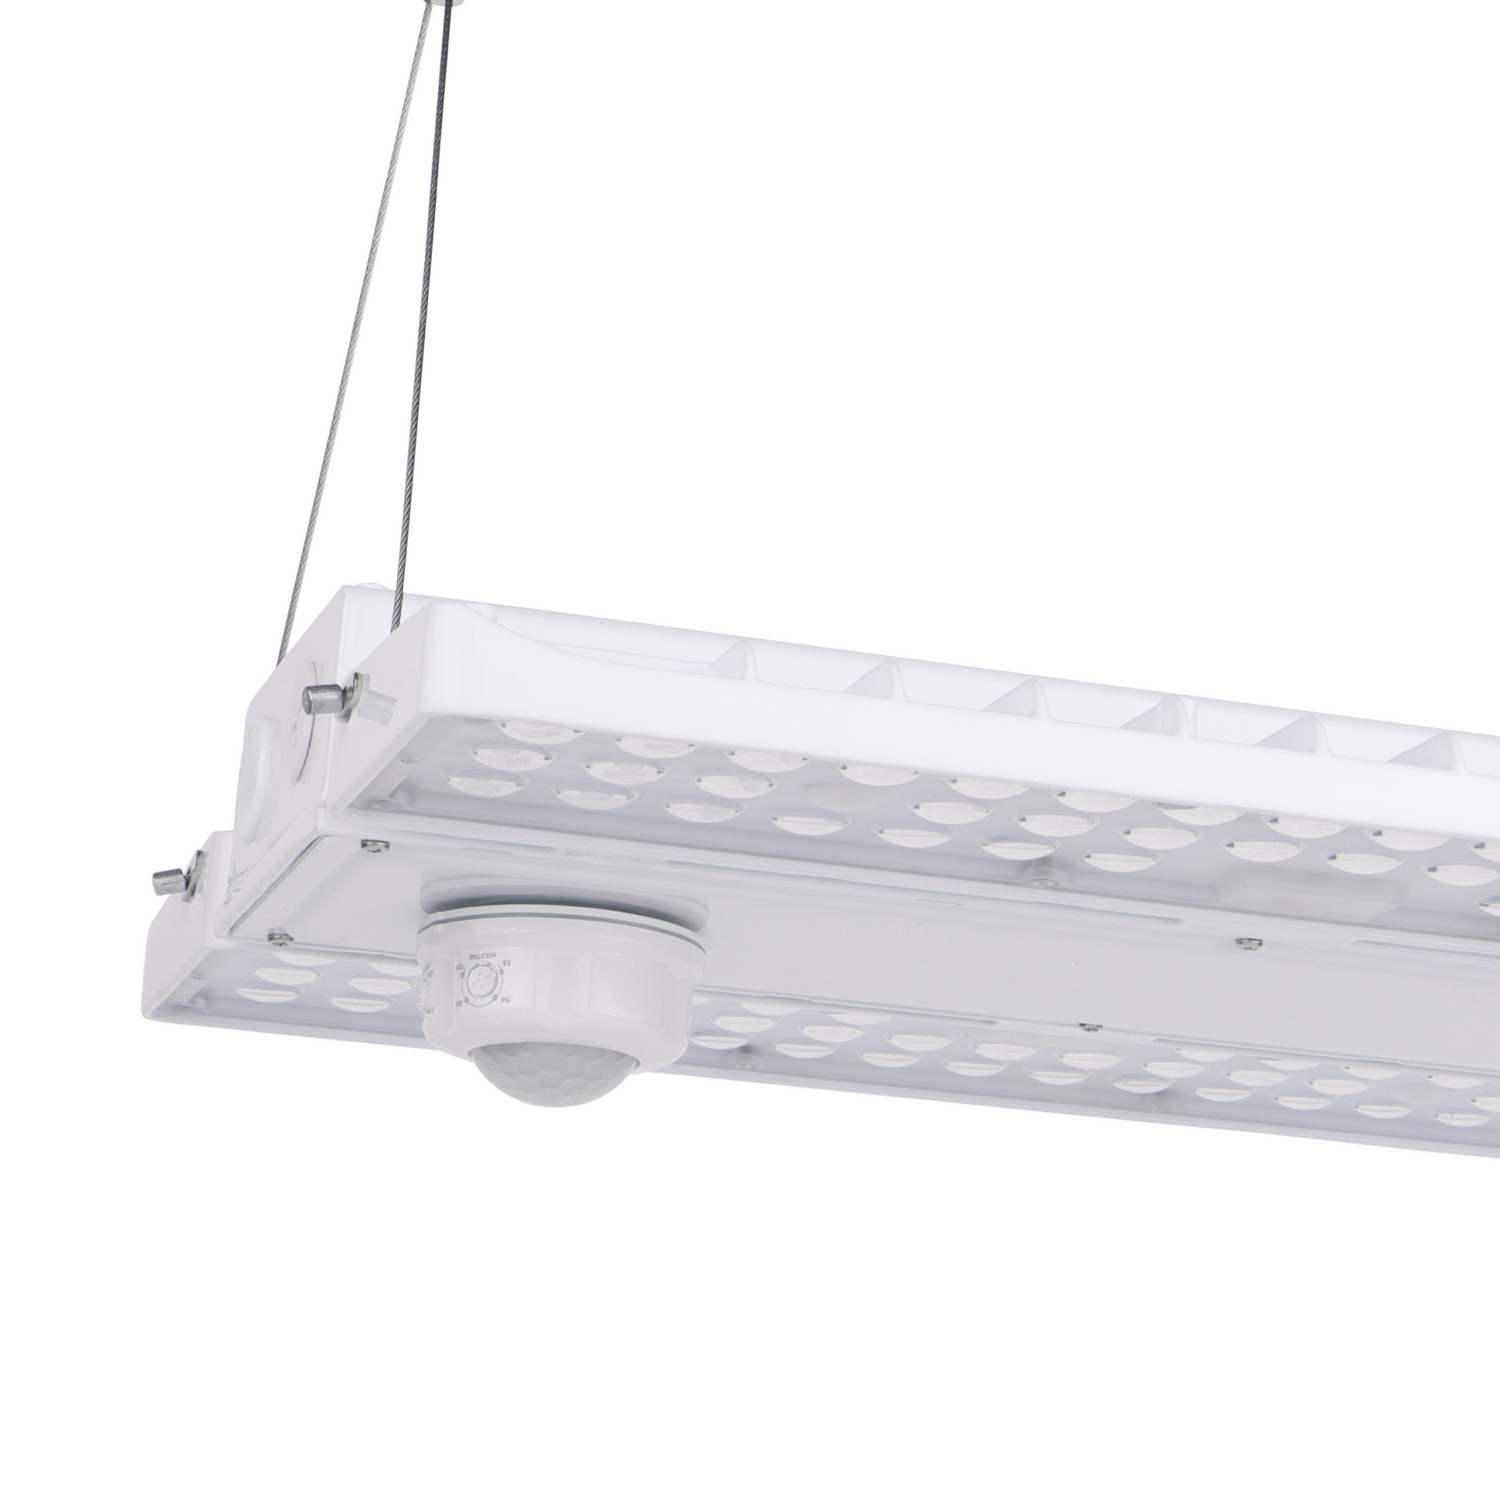 1.2FT LED Linear High Bay Light 155/180/210W Wattage Adjustable - 4000/5000K - 31500Lumens 0-10V Dimmable With sensor base, 277-480VAC Input Voltage DLC 5.1 Premium, White